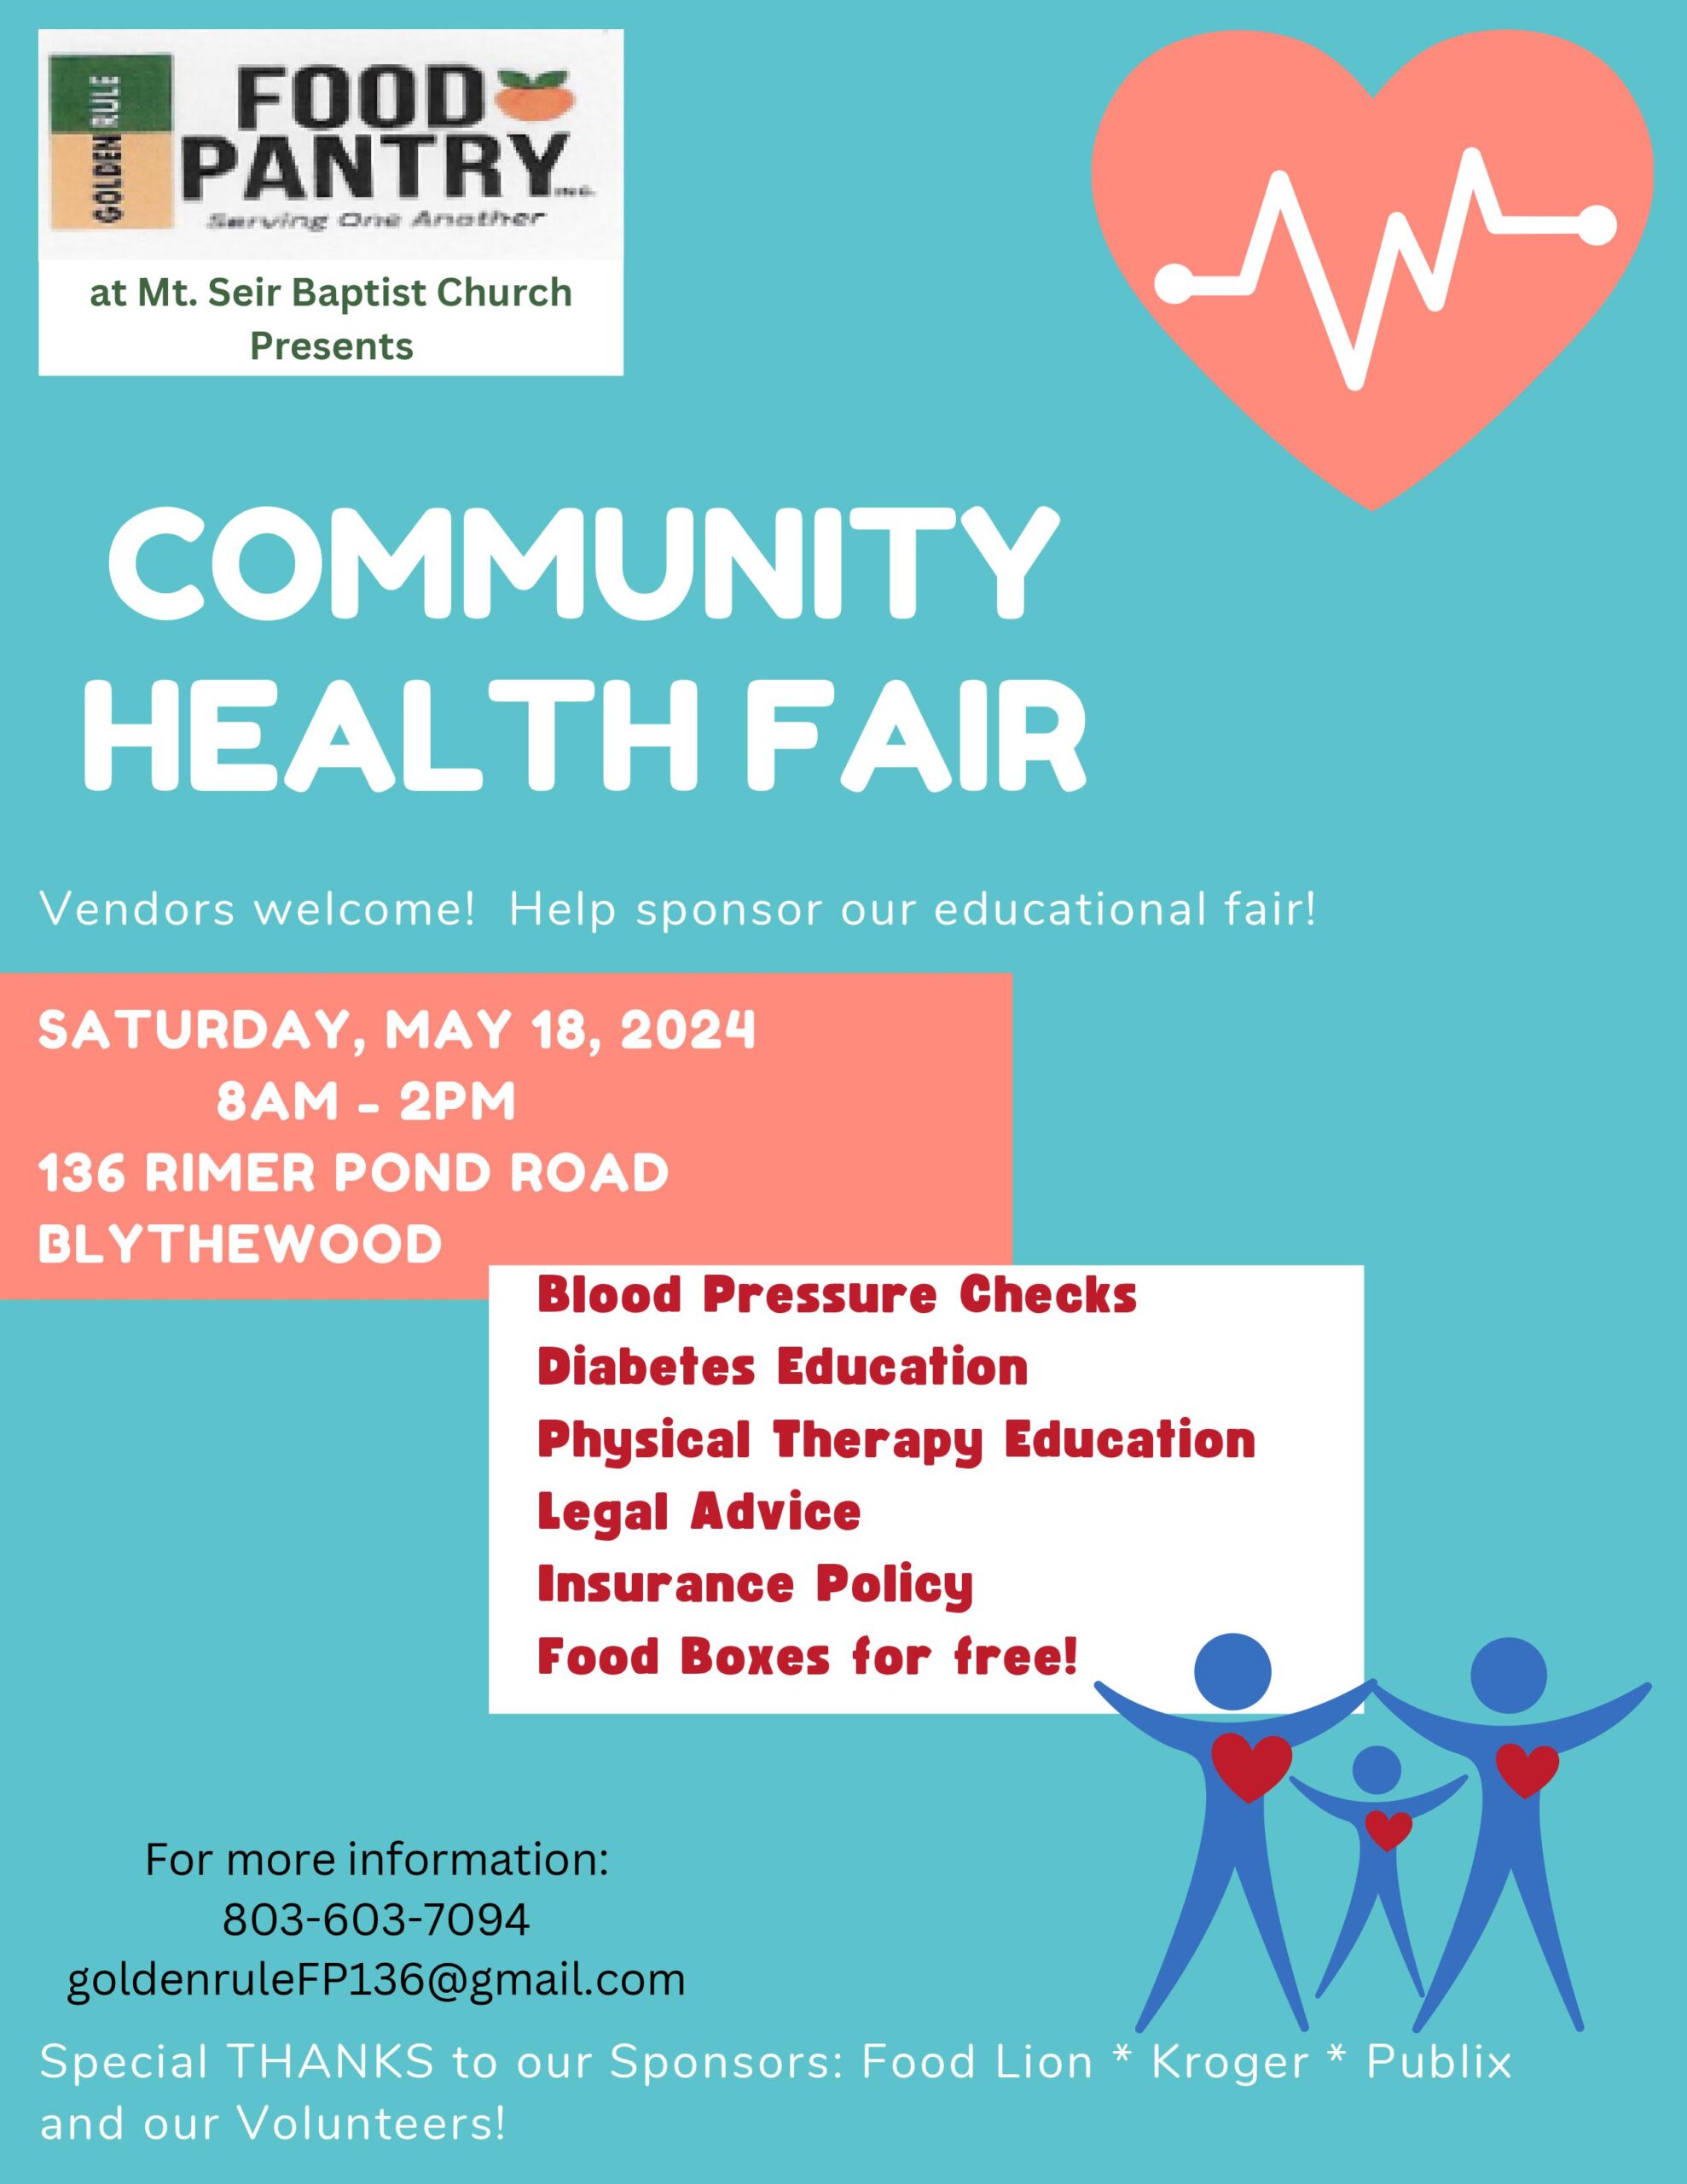 Community Health Fair on Saturday, May 18th, 2024